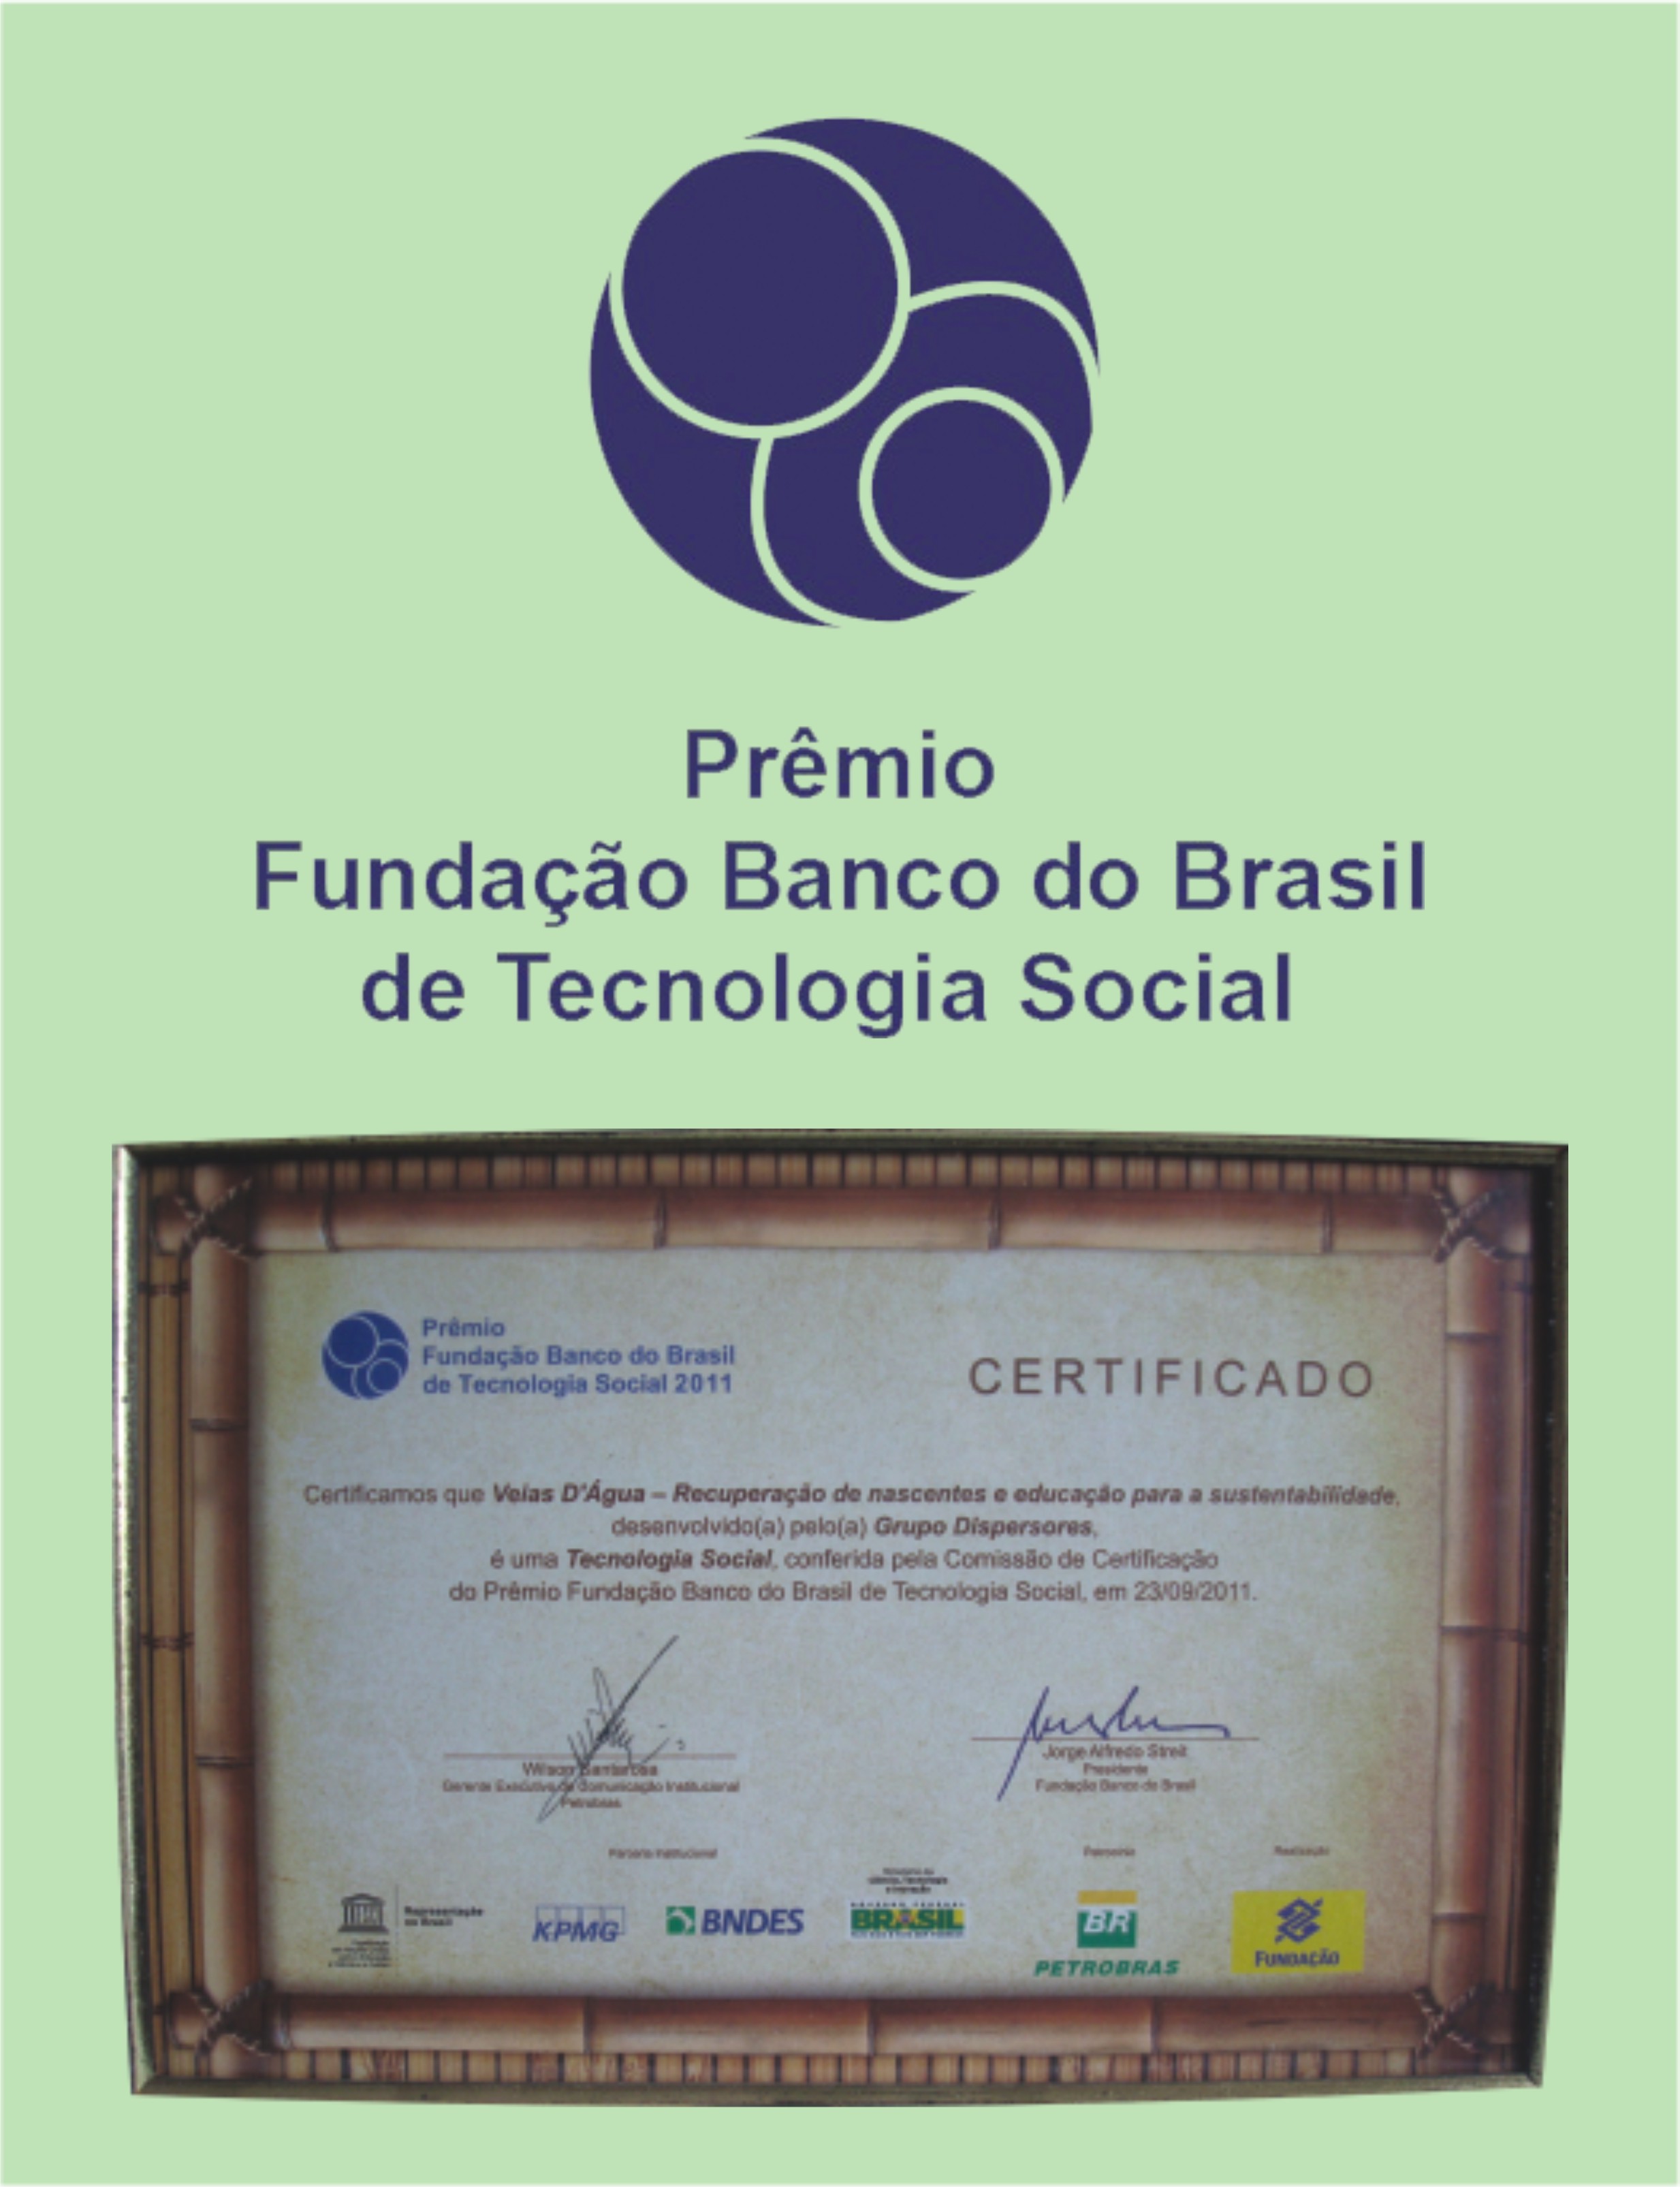 Bank of Brazil Foundation Award for Social Technologies